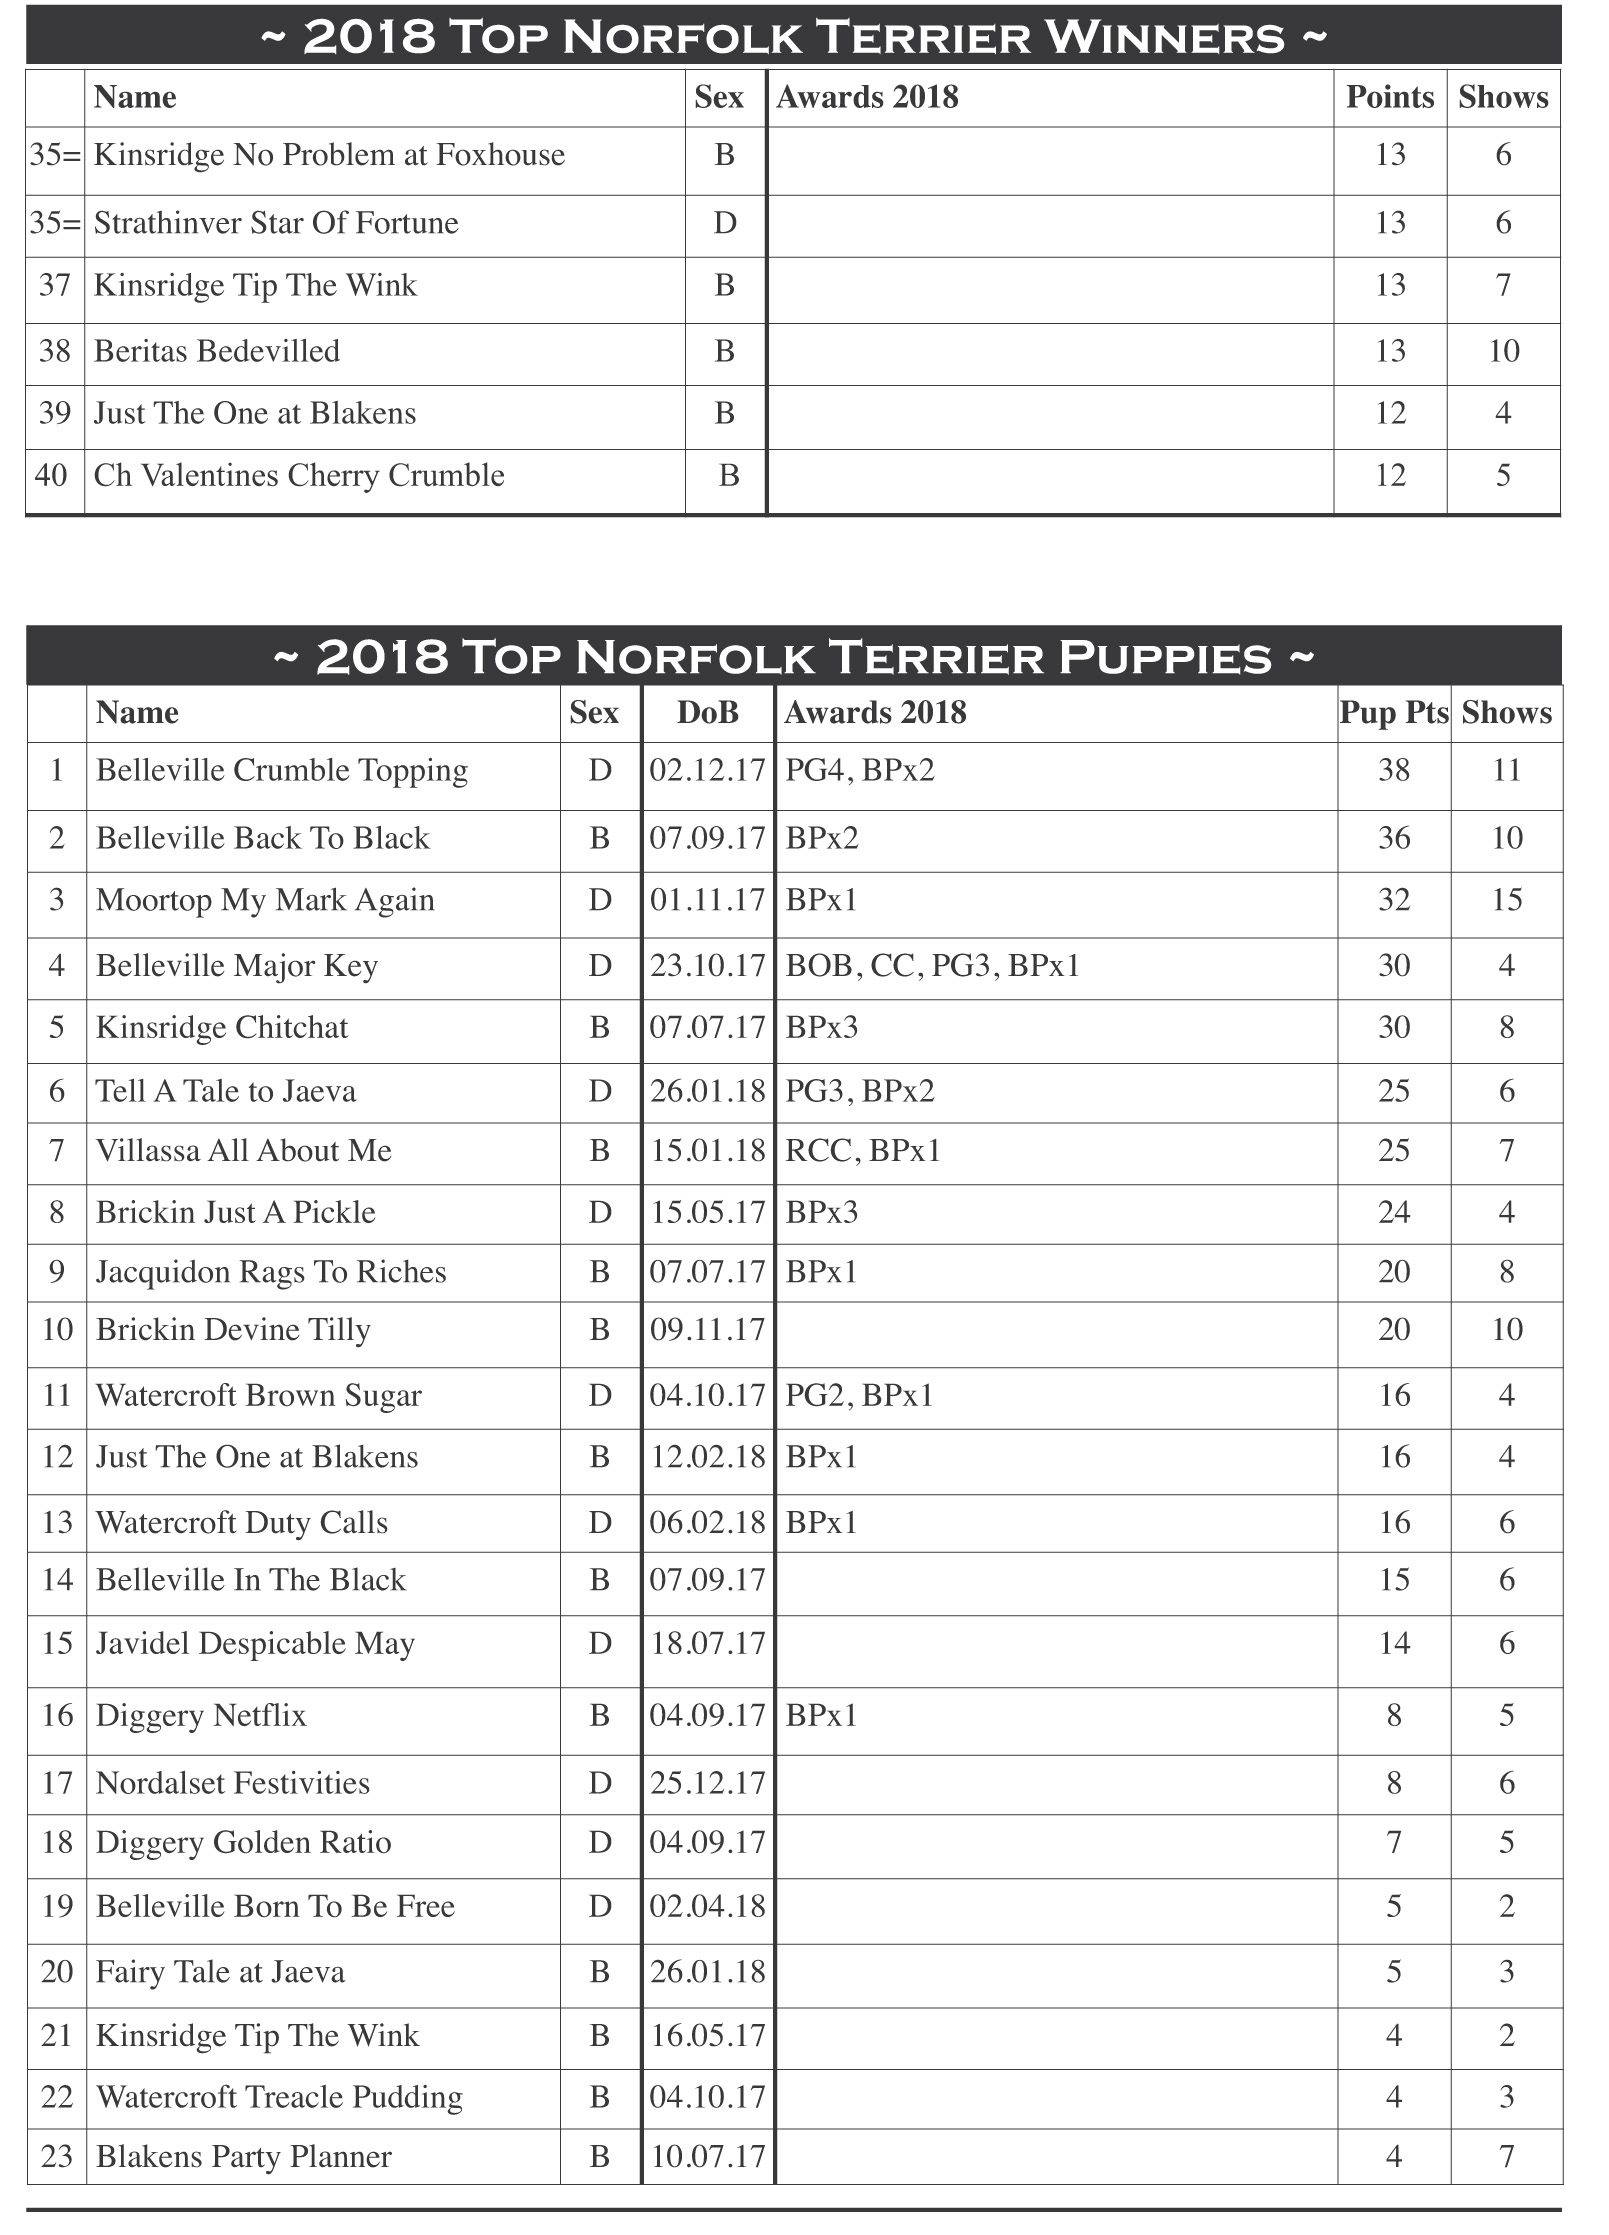 Top Norfolk Tables 2018 (2)